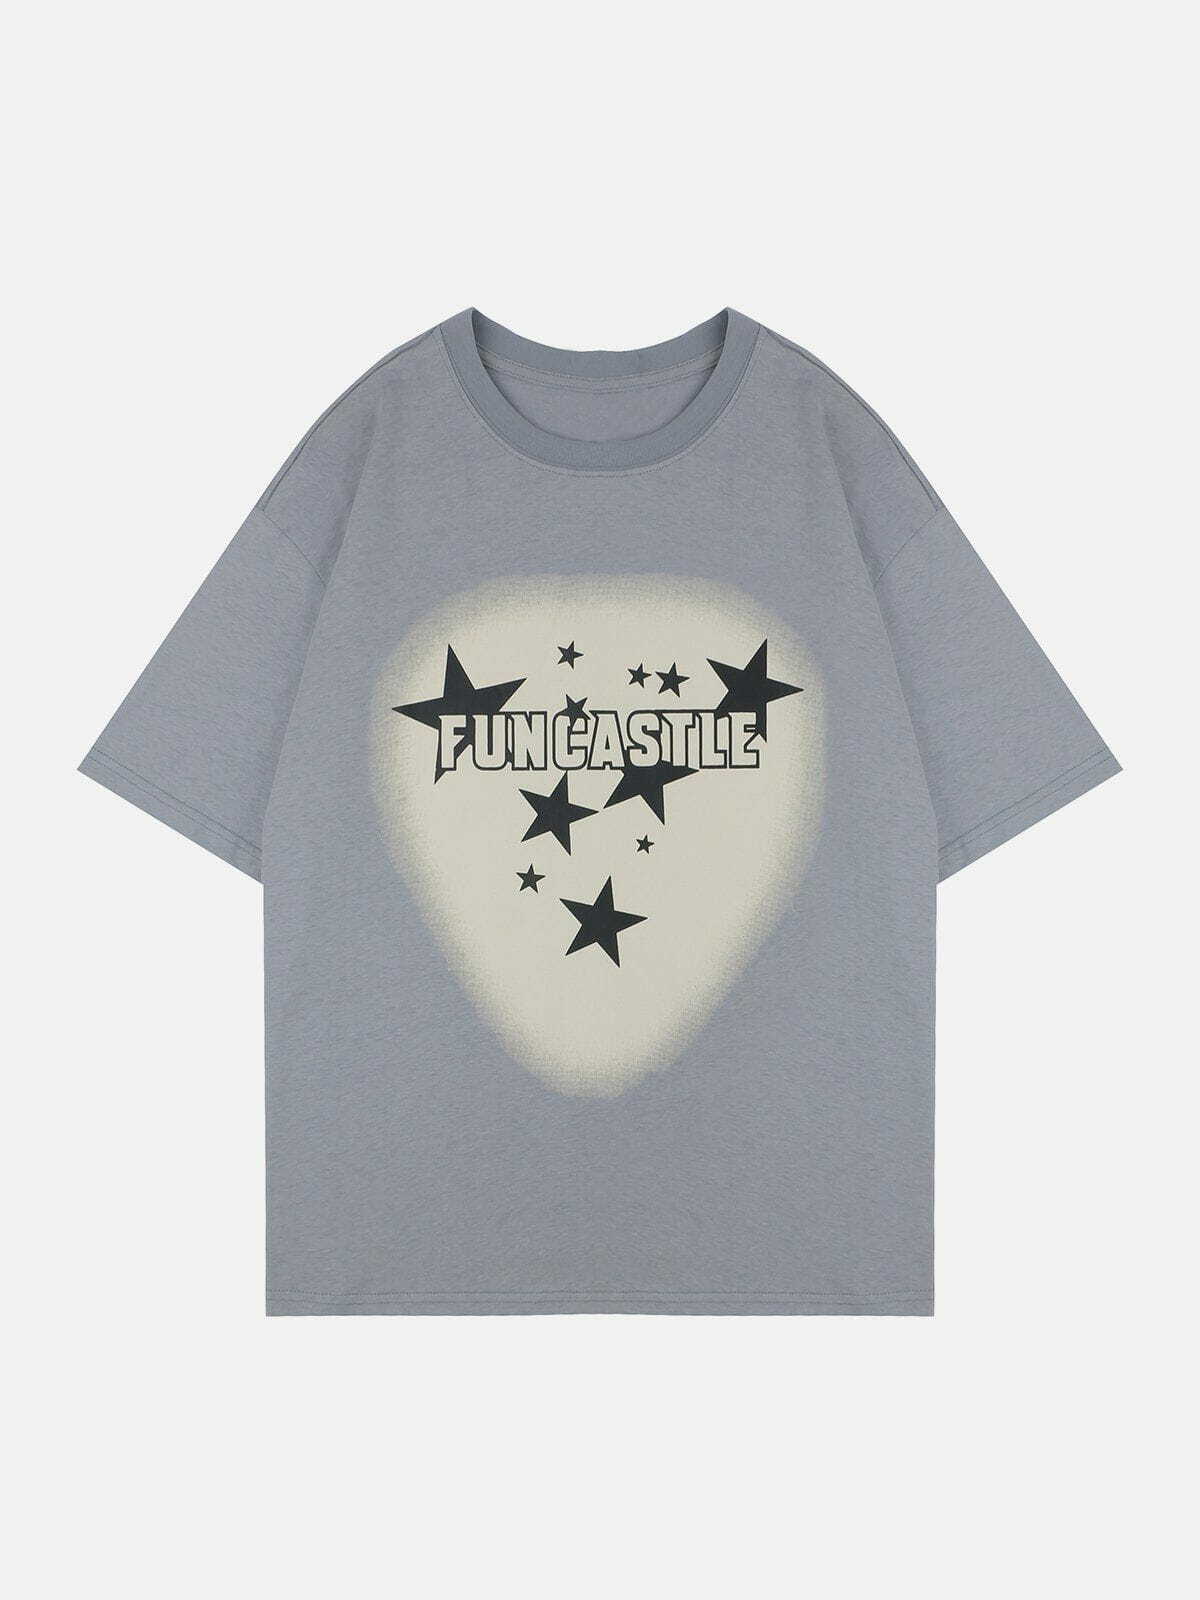 playful star print tee edgy  retro shirt for youthful streetwear 5558